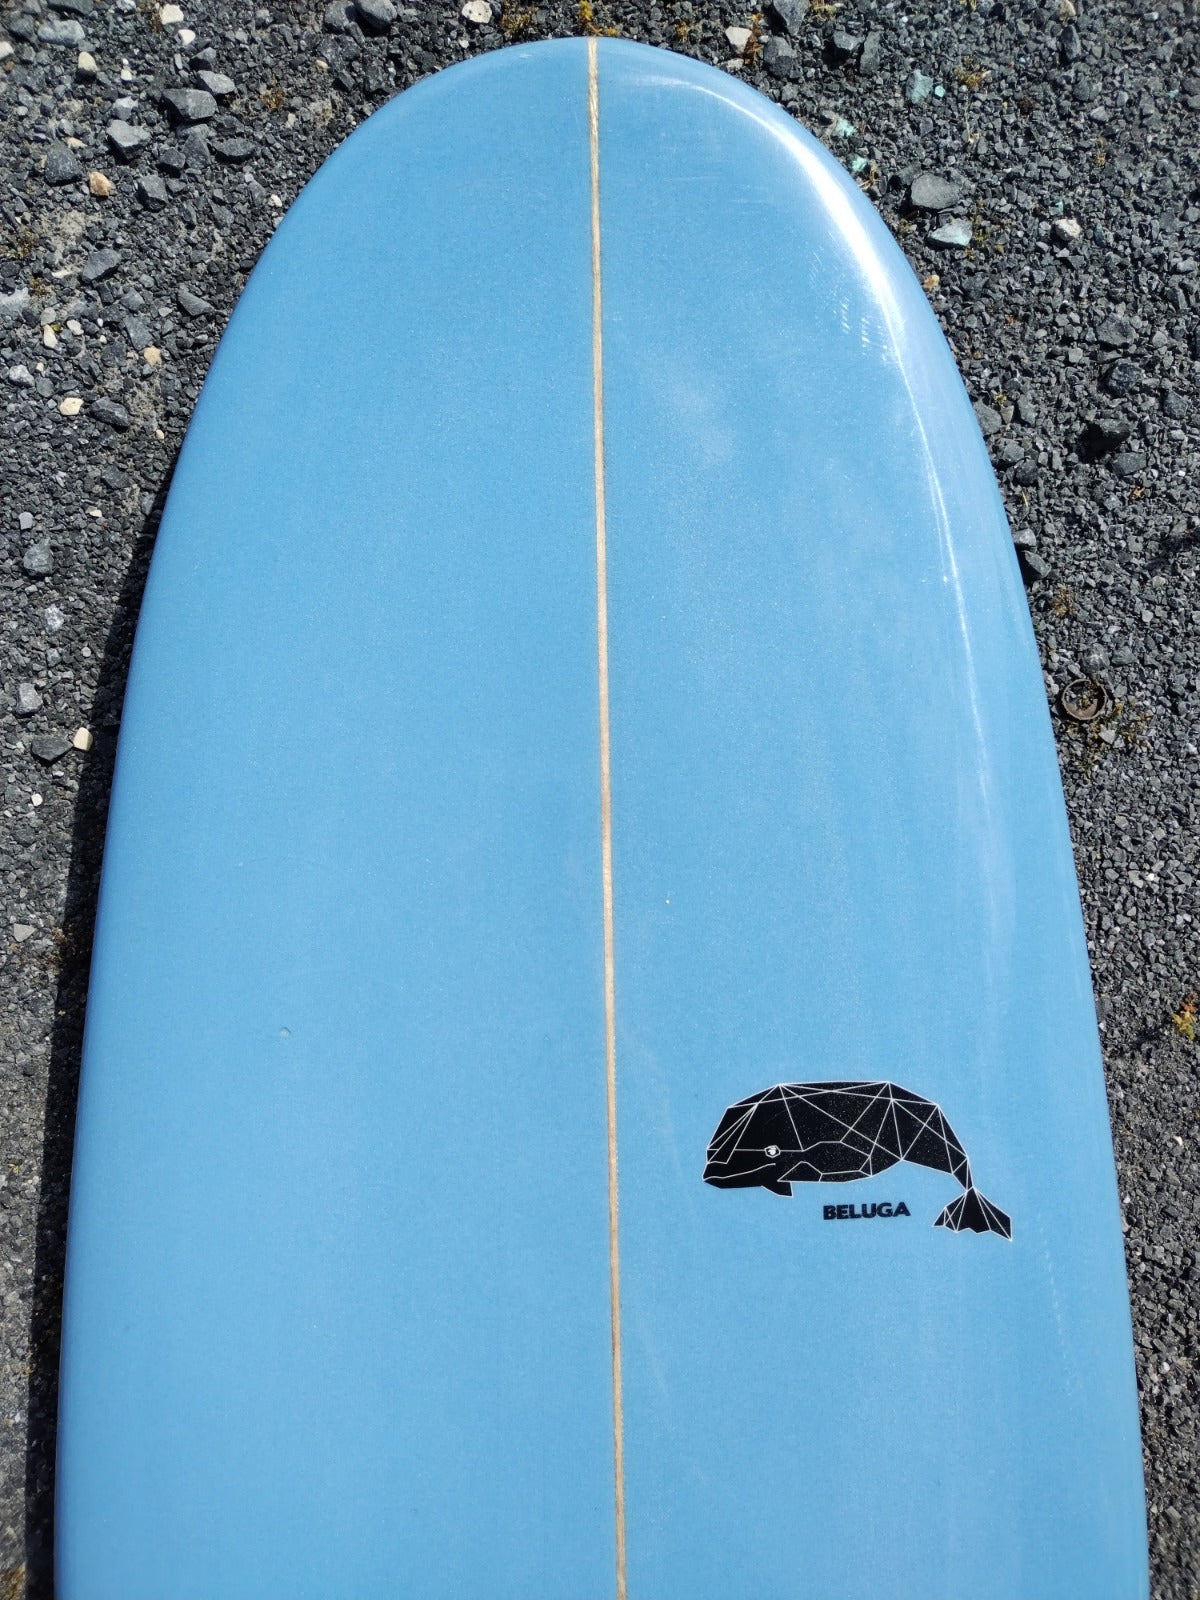 Storm Surfboards 6'10 Beluga Mini Mal Surfboard Design LB22